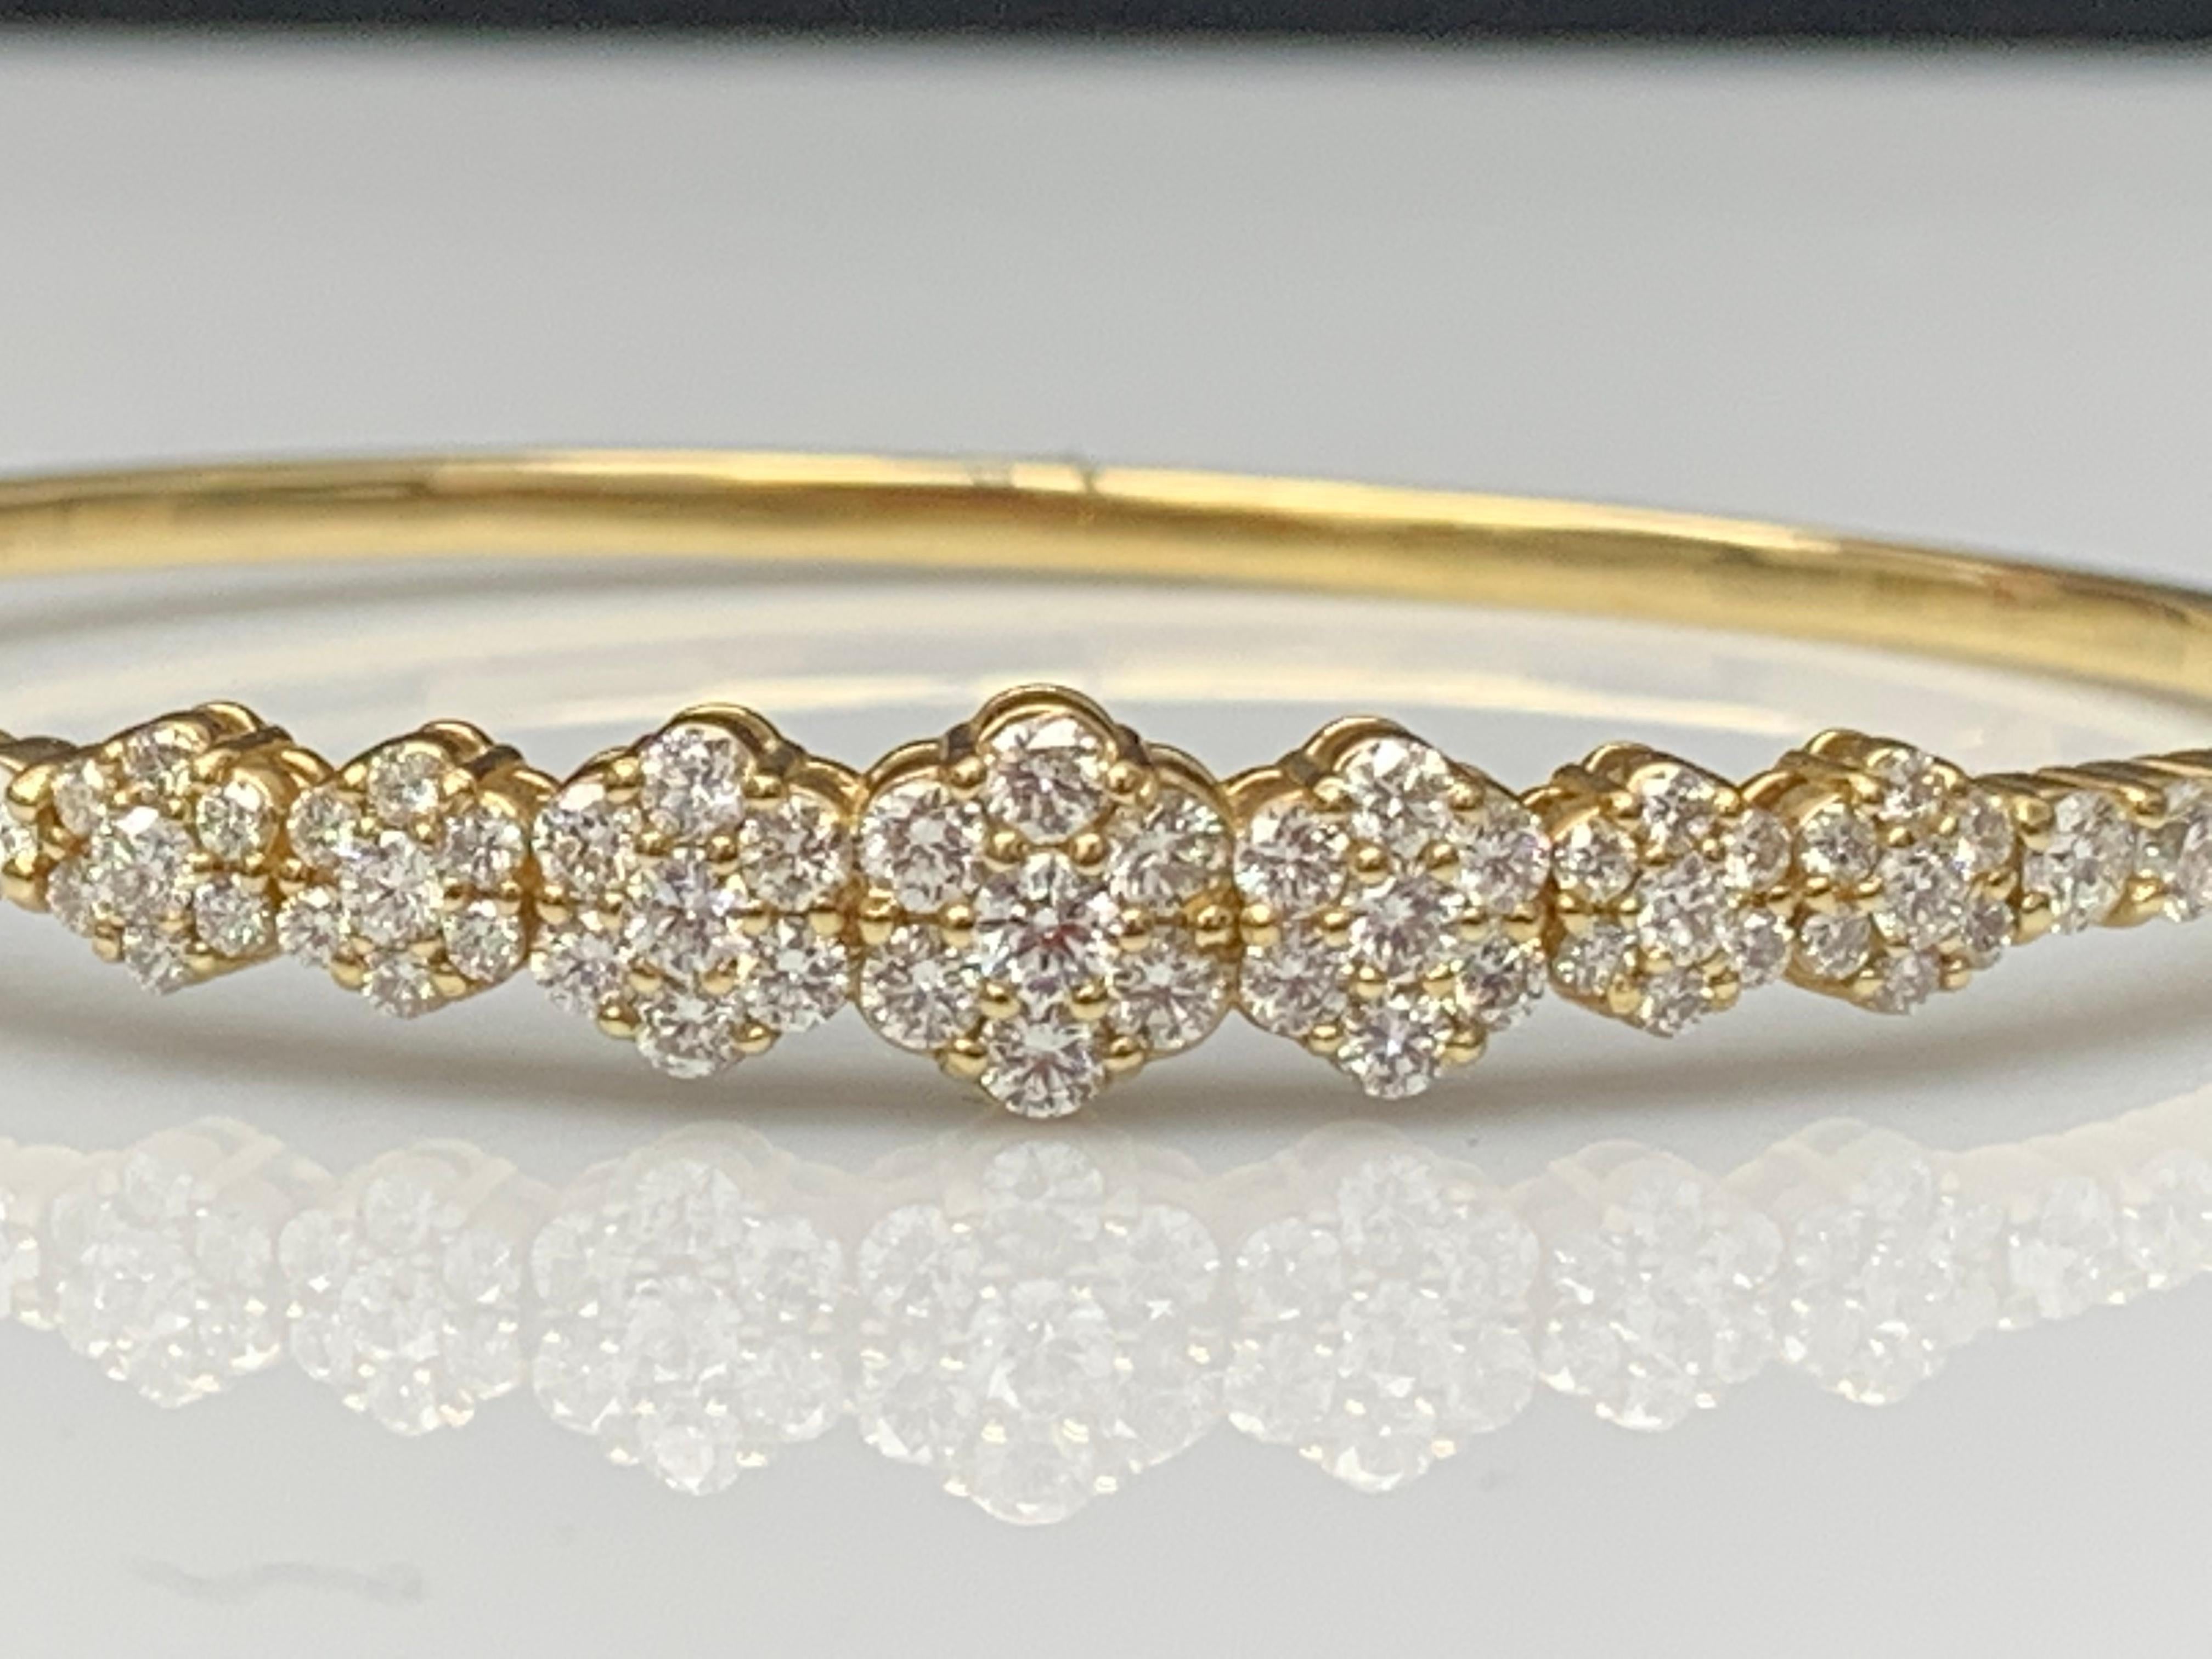 Grandeur 2.54 Carat Brilliant Cut Diamond Bangle in 14K Yellow Gold For Sale 5